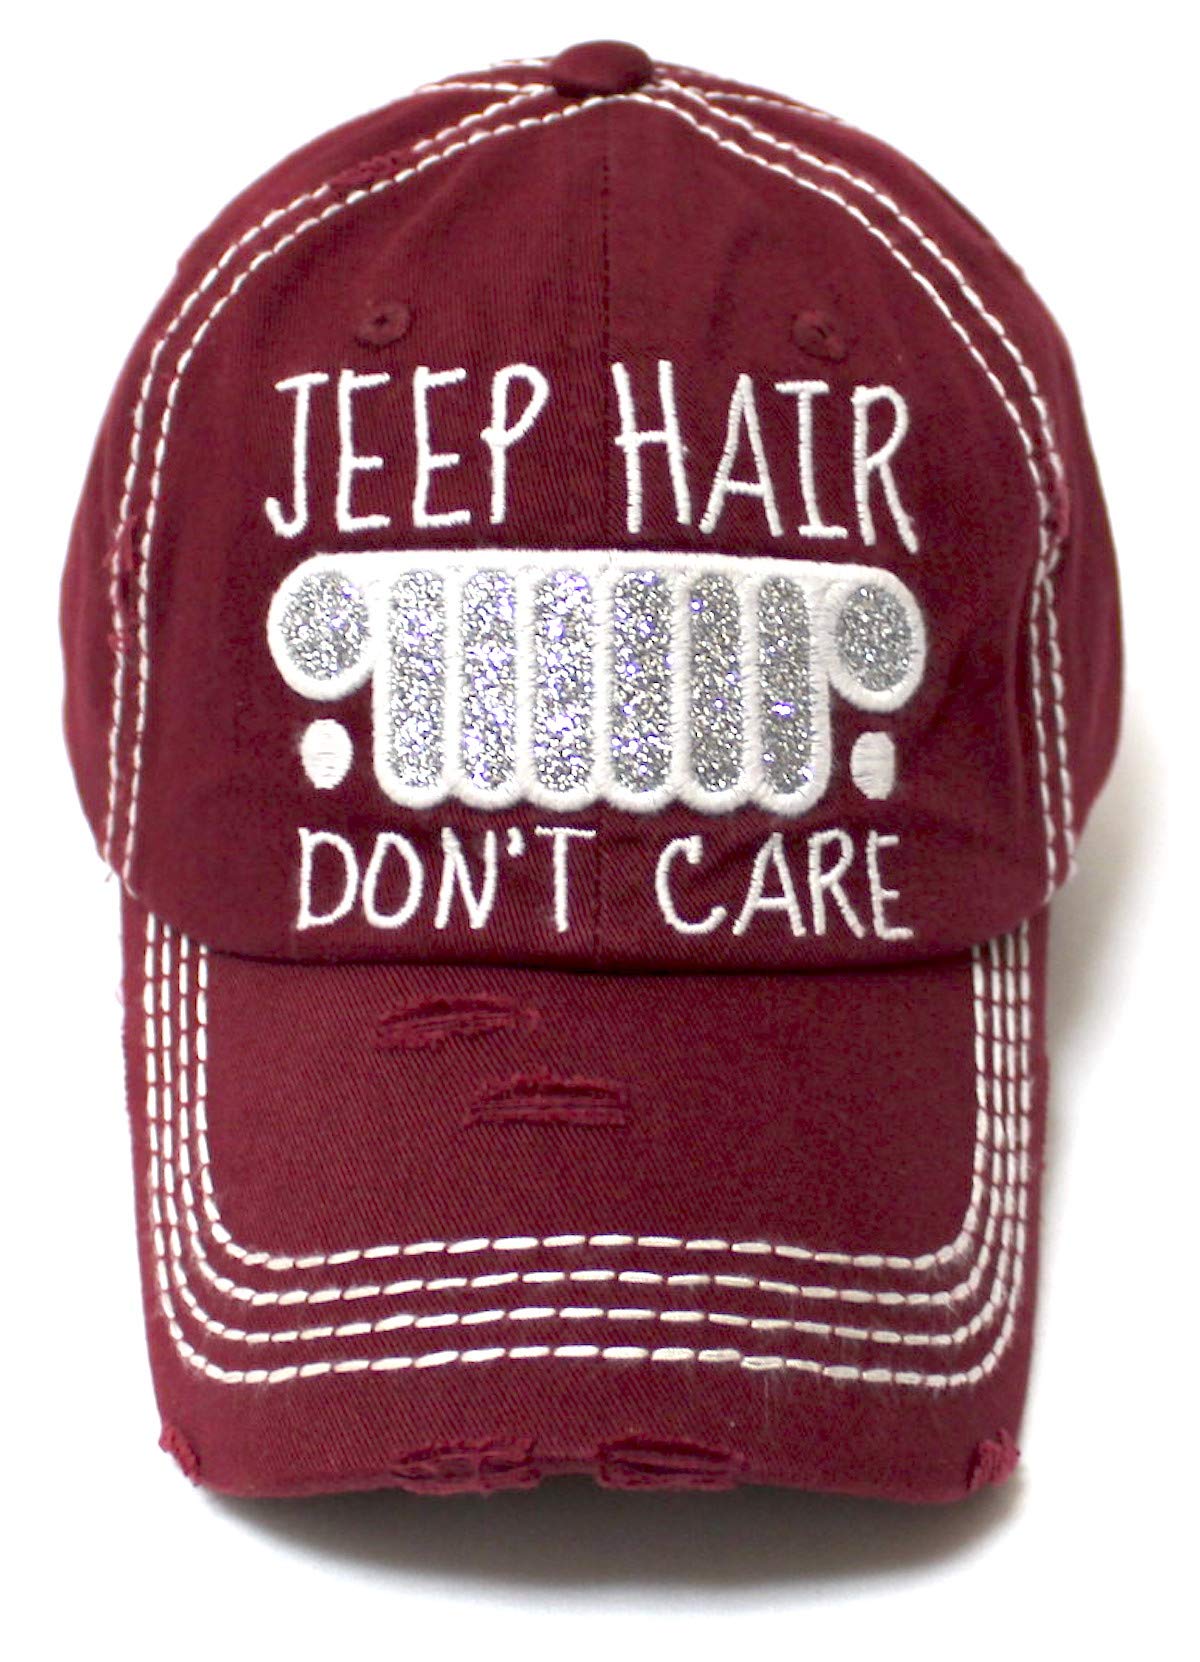 Jeep Hair Don't Care Glitter Monogram Adnustable Hat, Wine - Caps 'N Vintage 